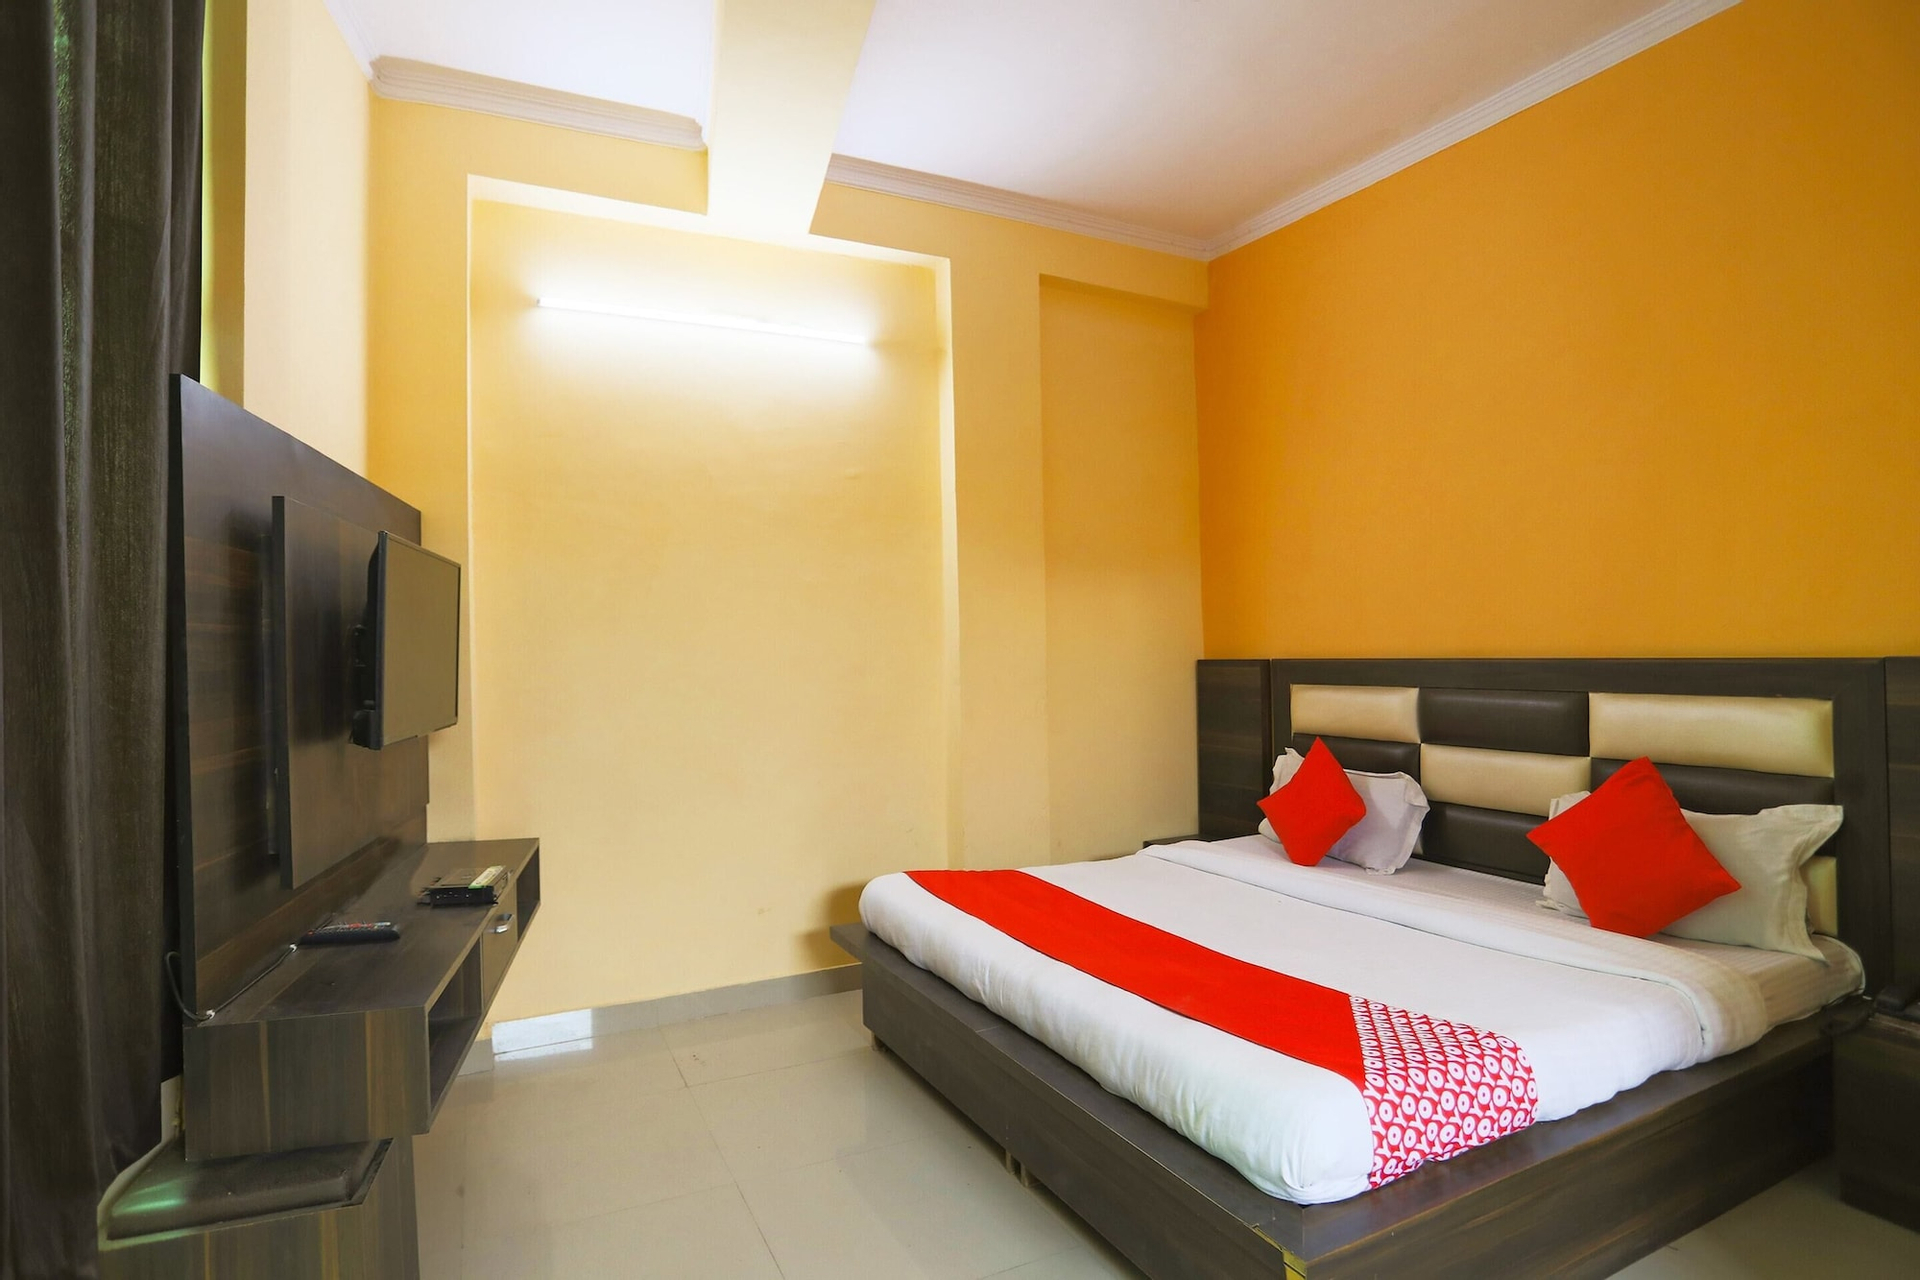 Bedroom 1, OYO 16362 Hotel National, Faridabad